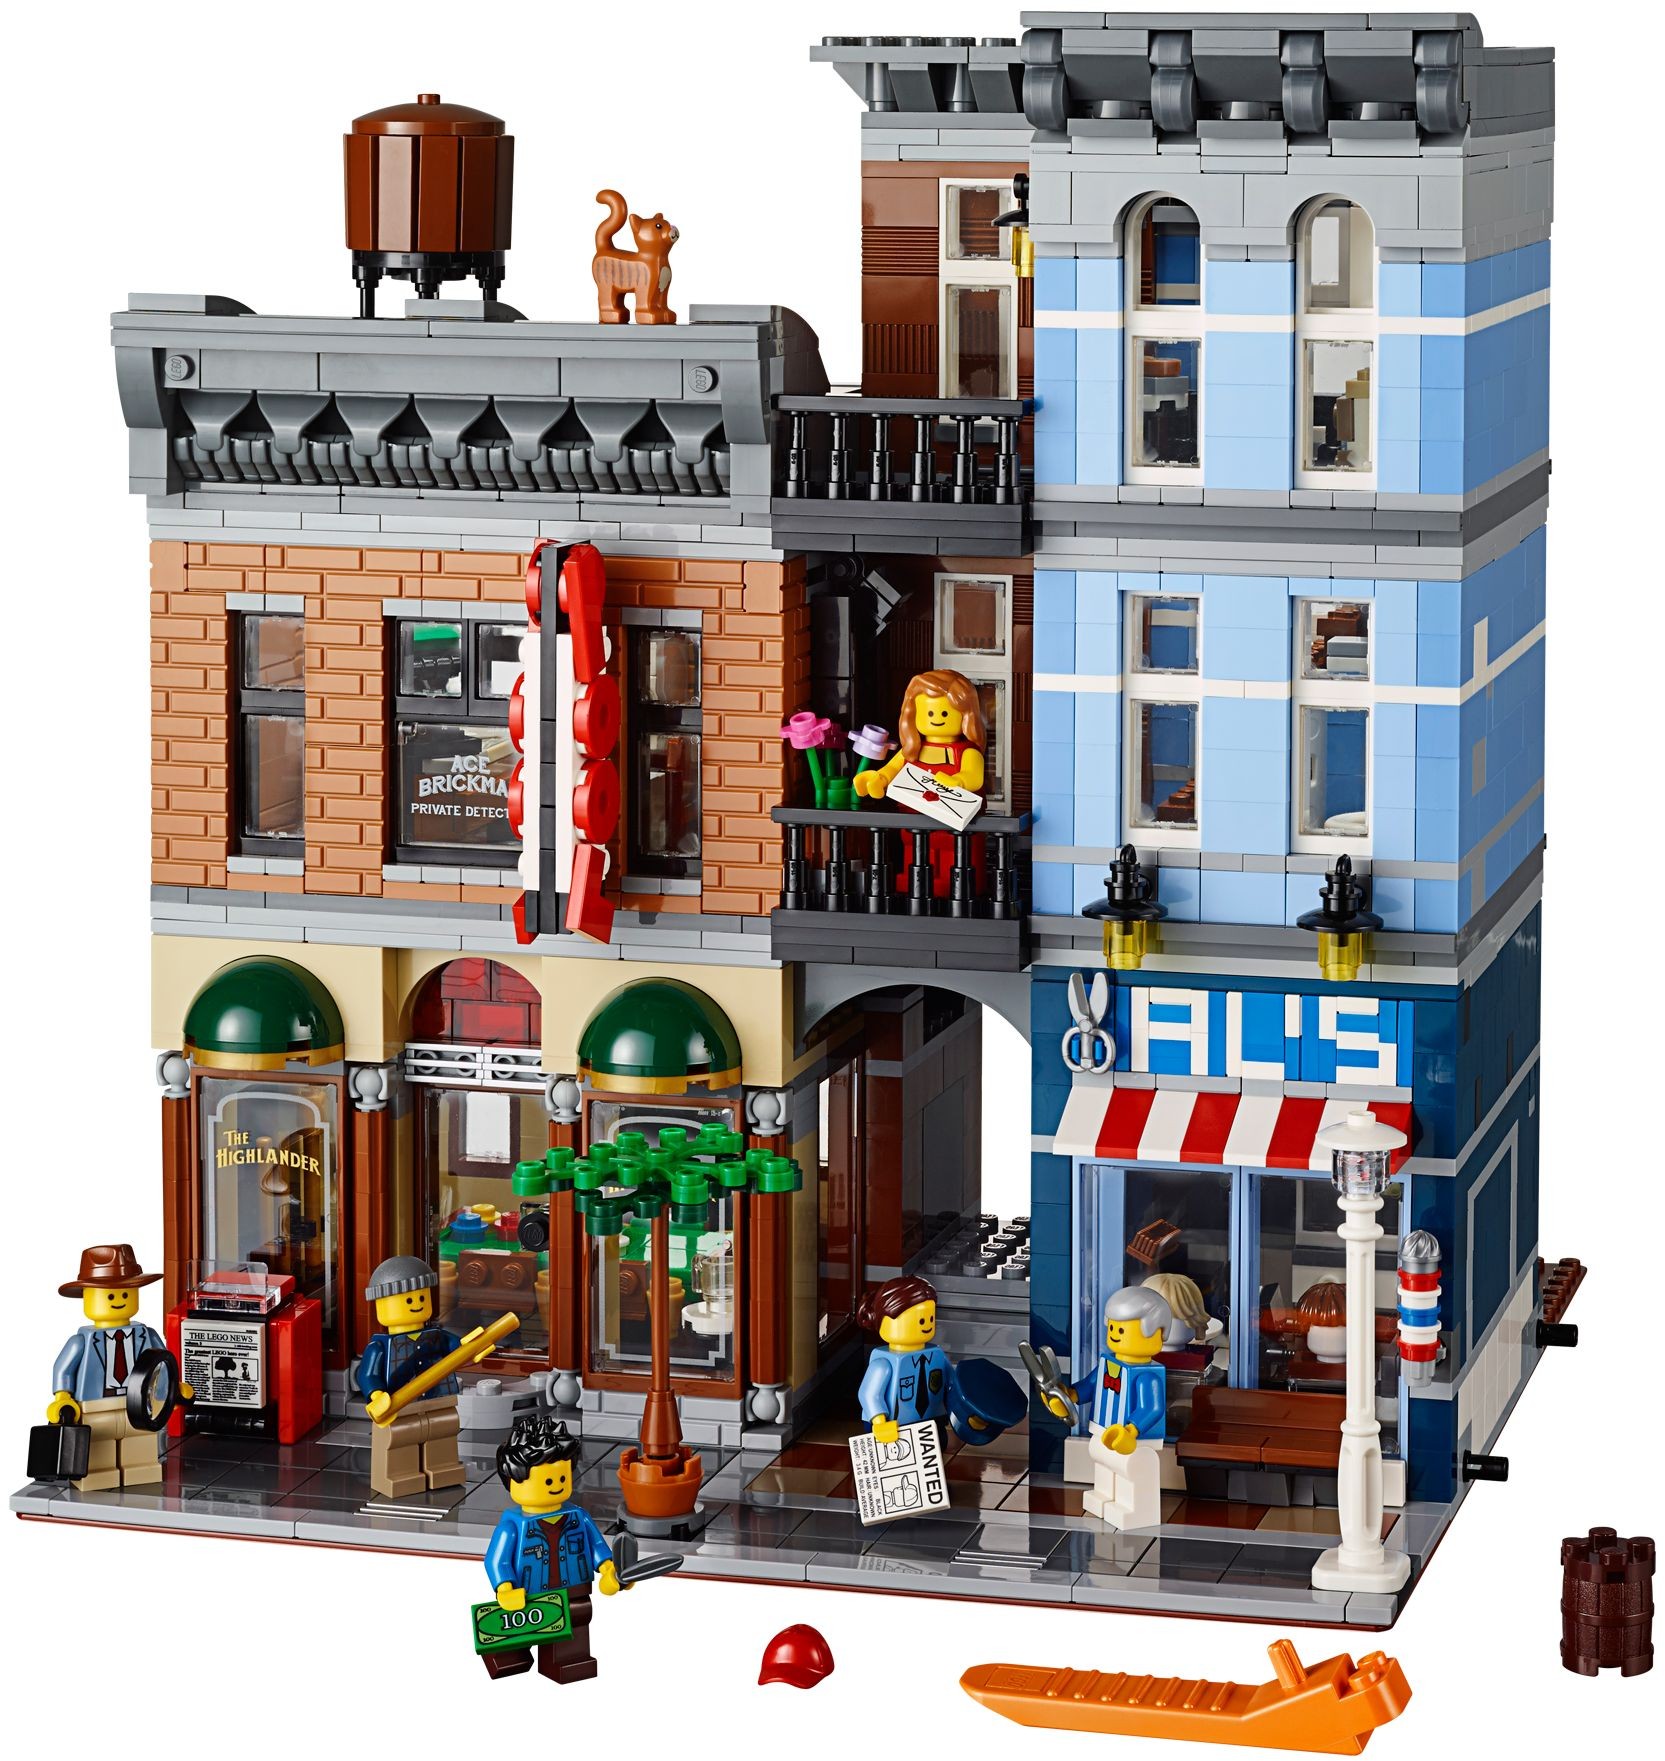 Lego Creator Set